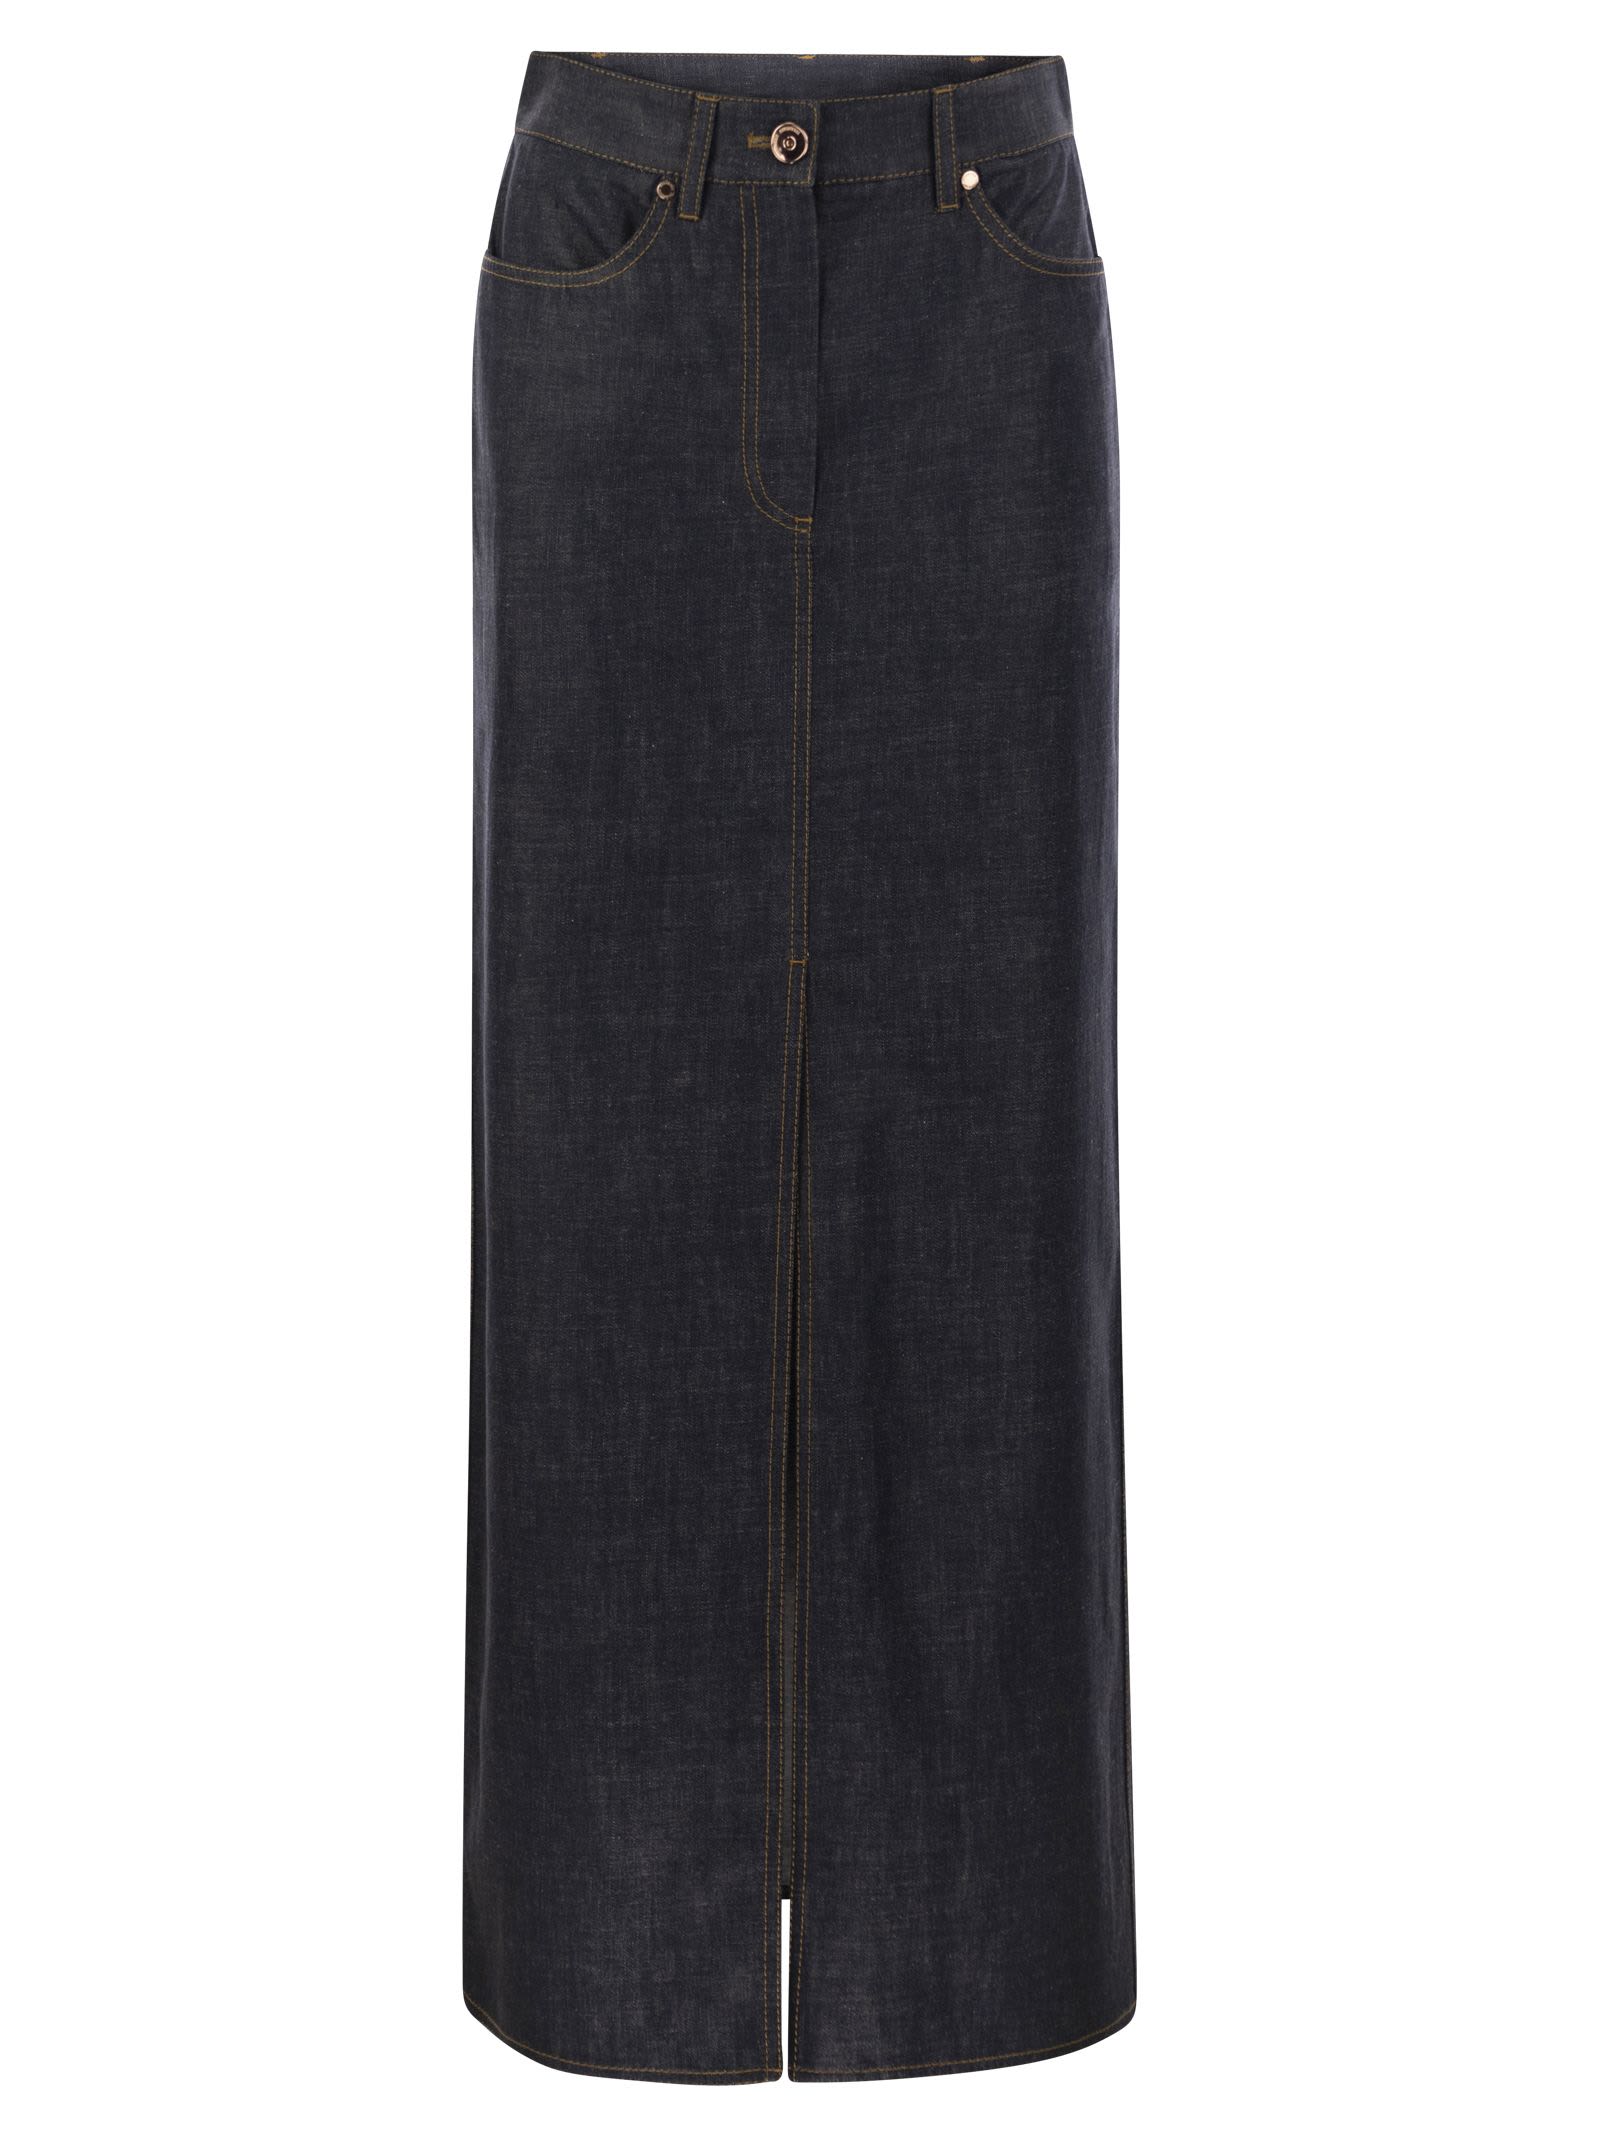 Long Five-pocket Skirt In Wet-effect Light Denim With Shiny Tab